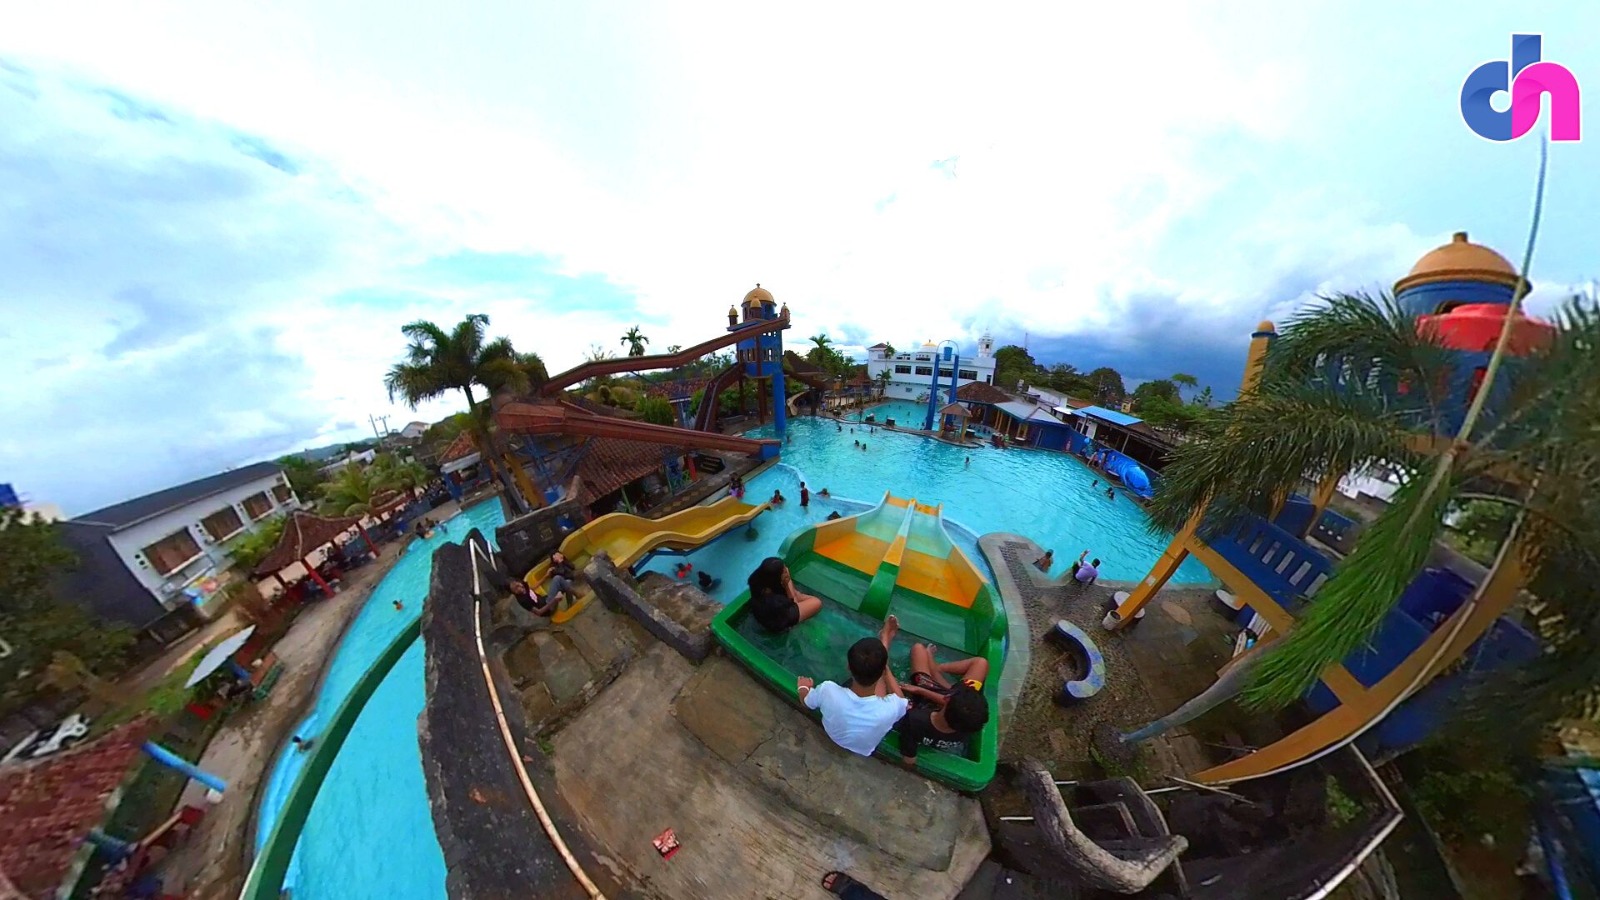 Kharisma Swiming Pool (KSP) yang berdiri sejak tahun 2003 ini menjadi salah satu lokasi wisata air bagi warga Bandar Lampung yang ingin menghabiskan waktu bersama keluarga. Jumat (3/2/2023)